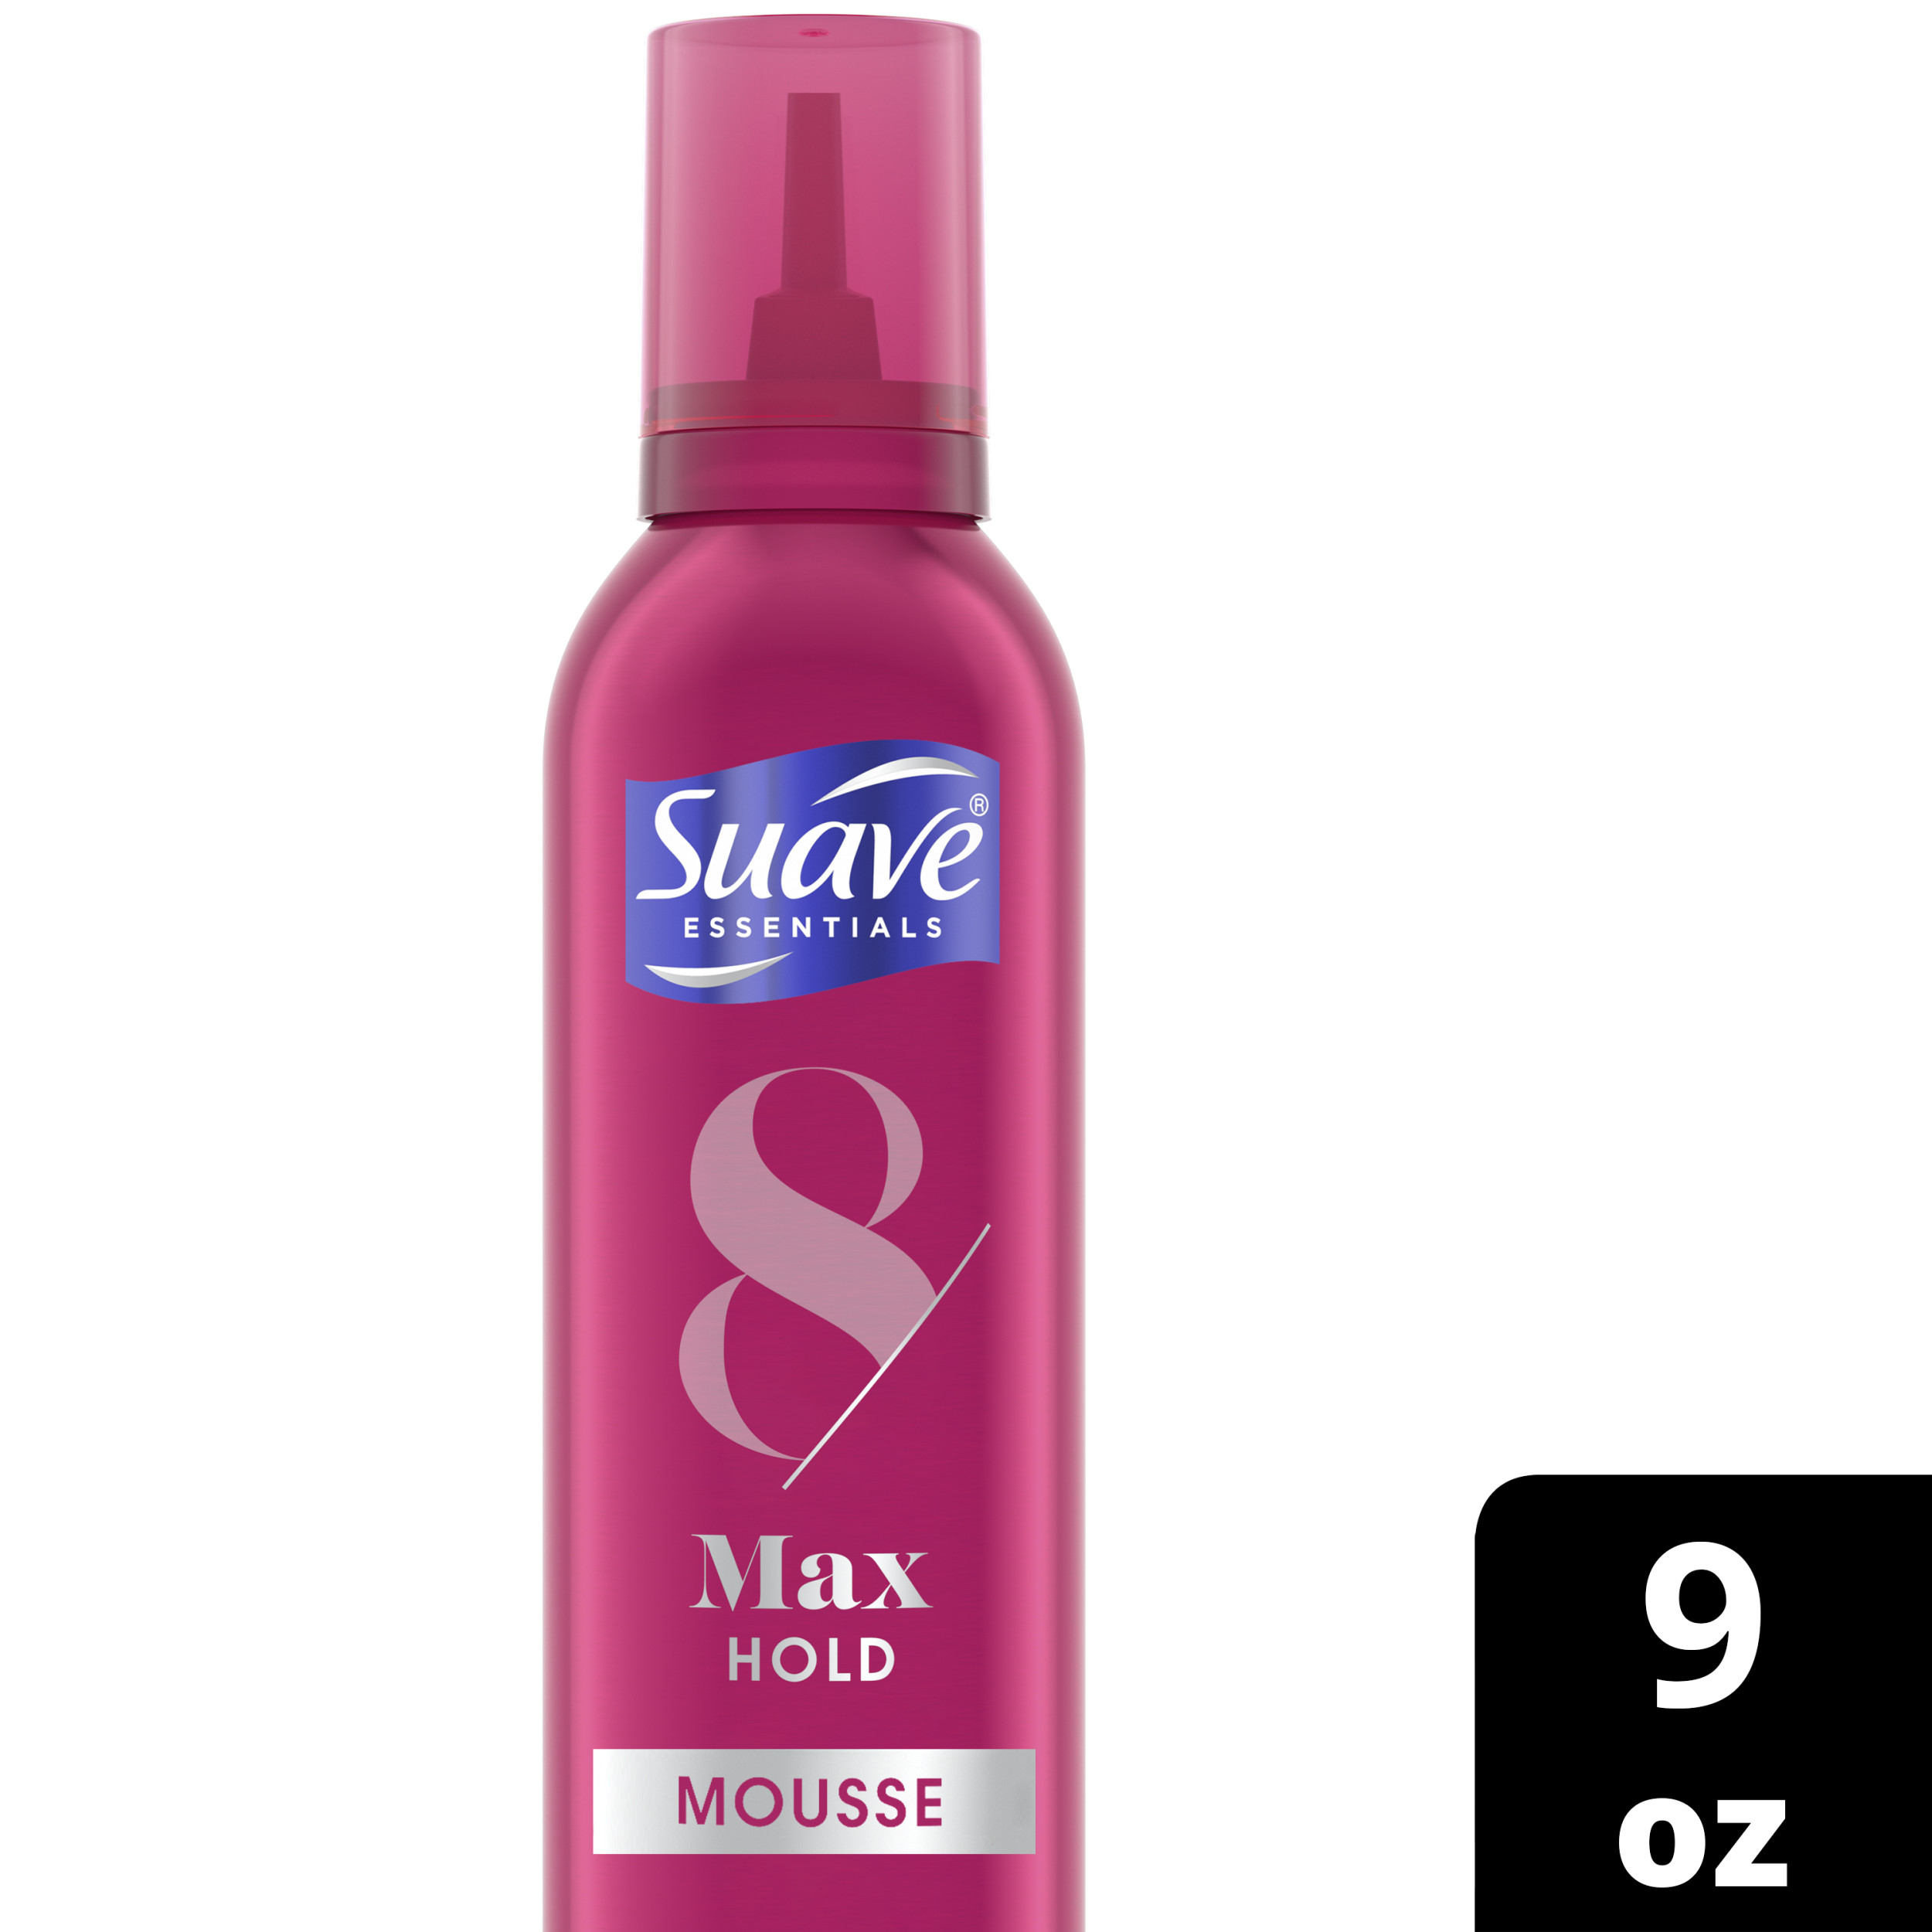 Suave Max Hold Volumizing Mousse for Body & Lift, 9 oz - image 2 of 7